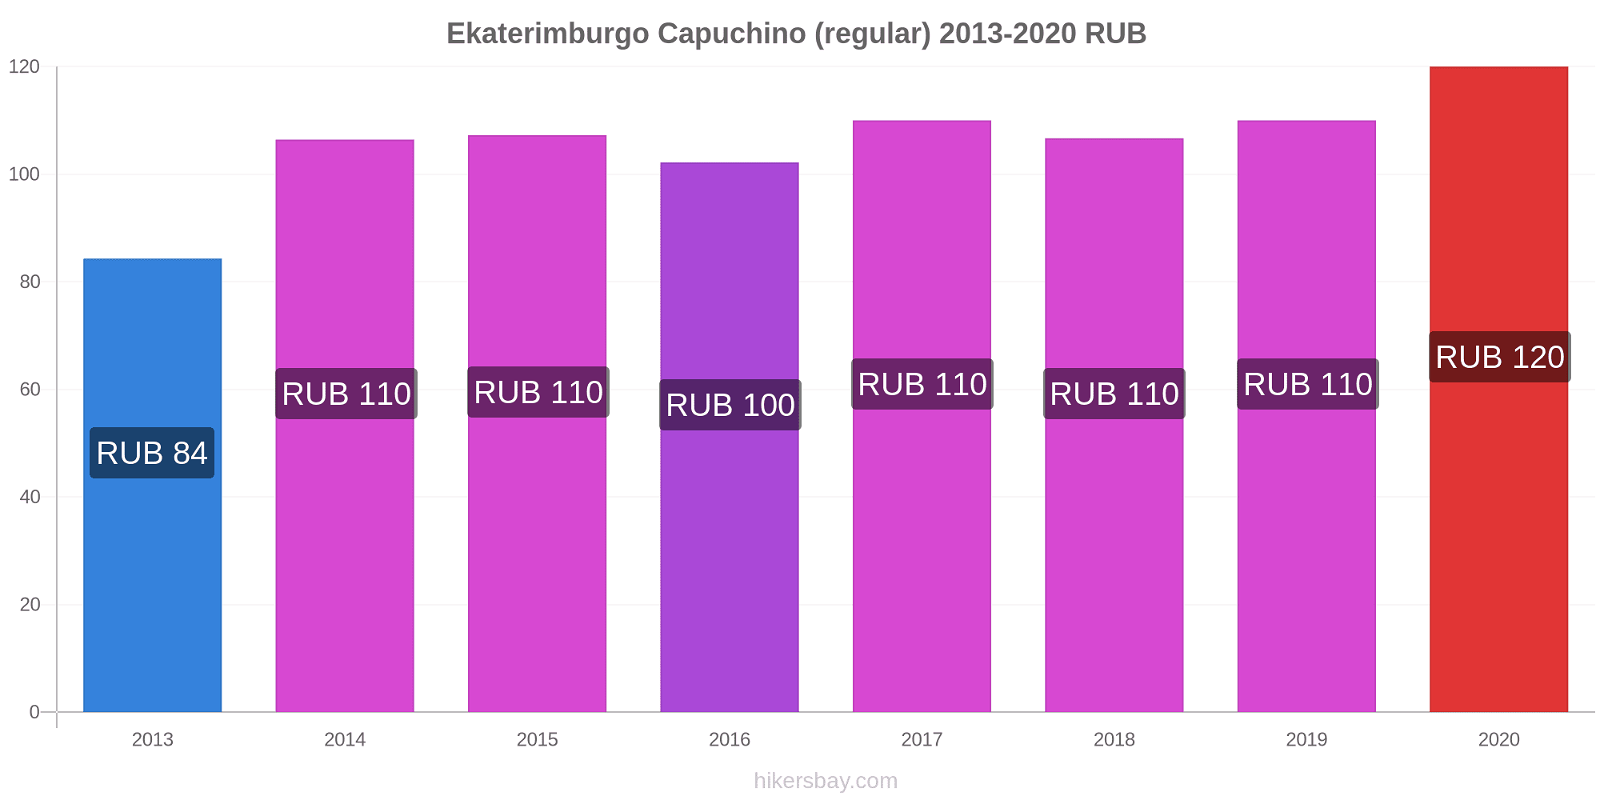 Ekaterimburgo cambios de precios Capuchino (regular) hikersbay.com